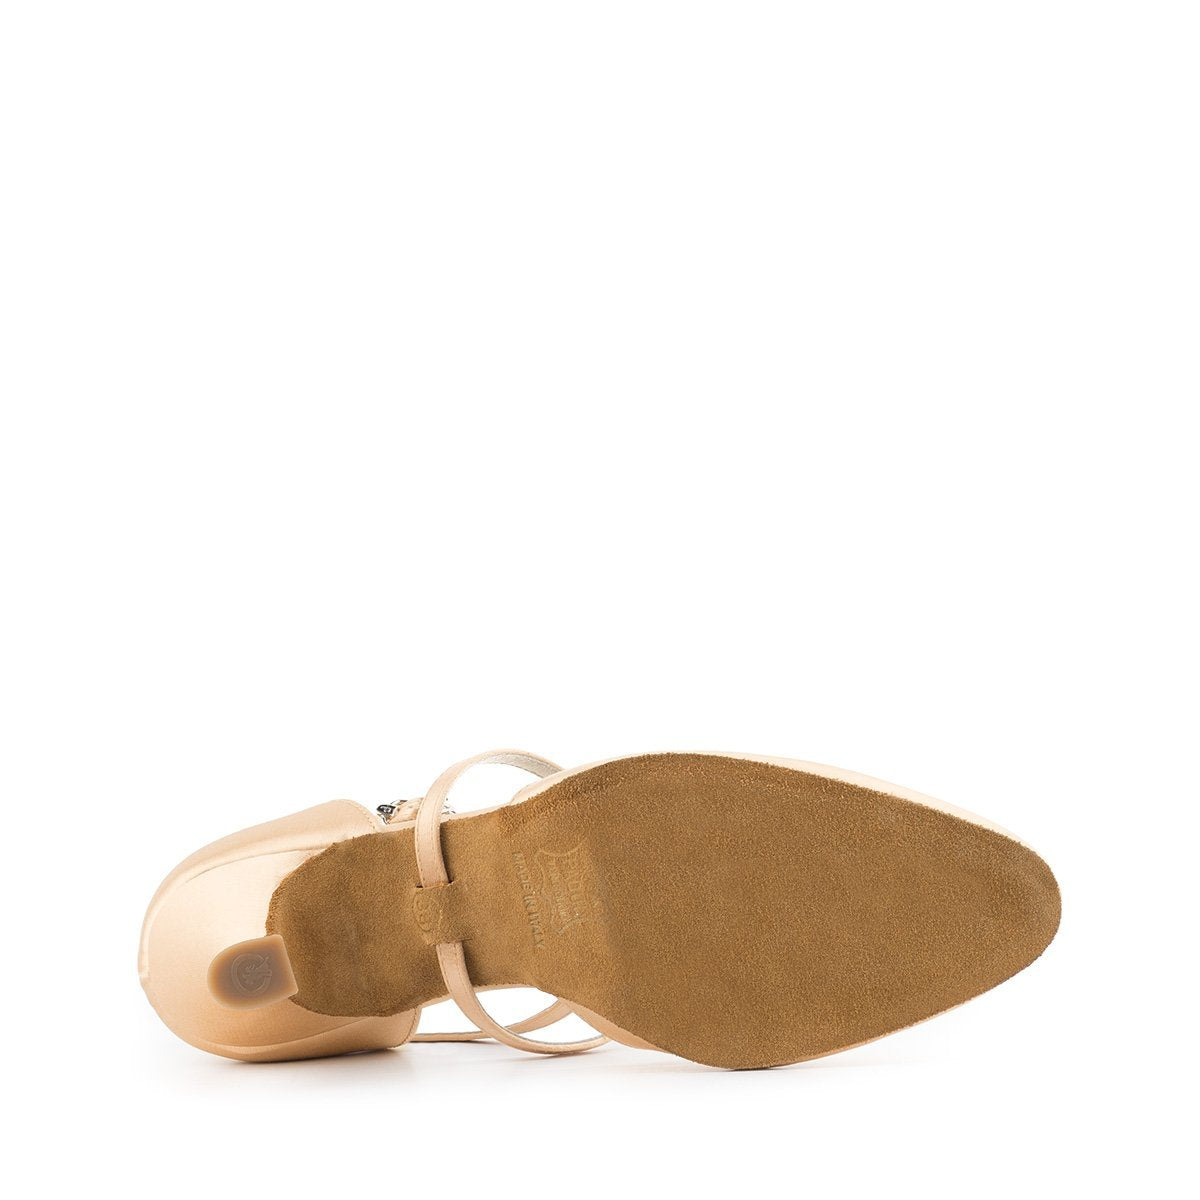 Suede sole on women's dance shoe for ballroom